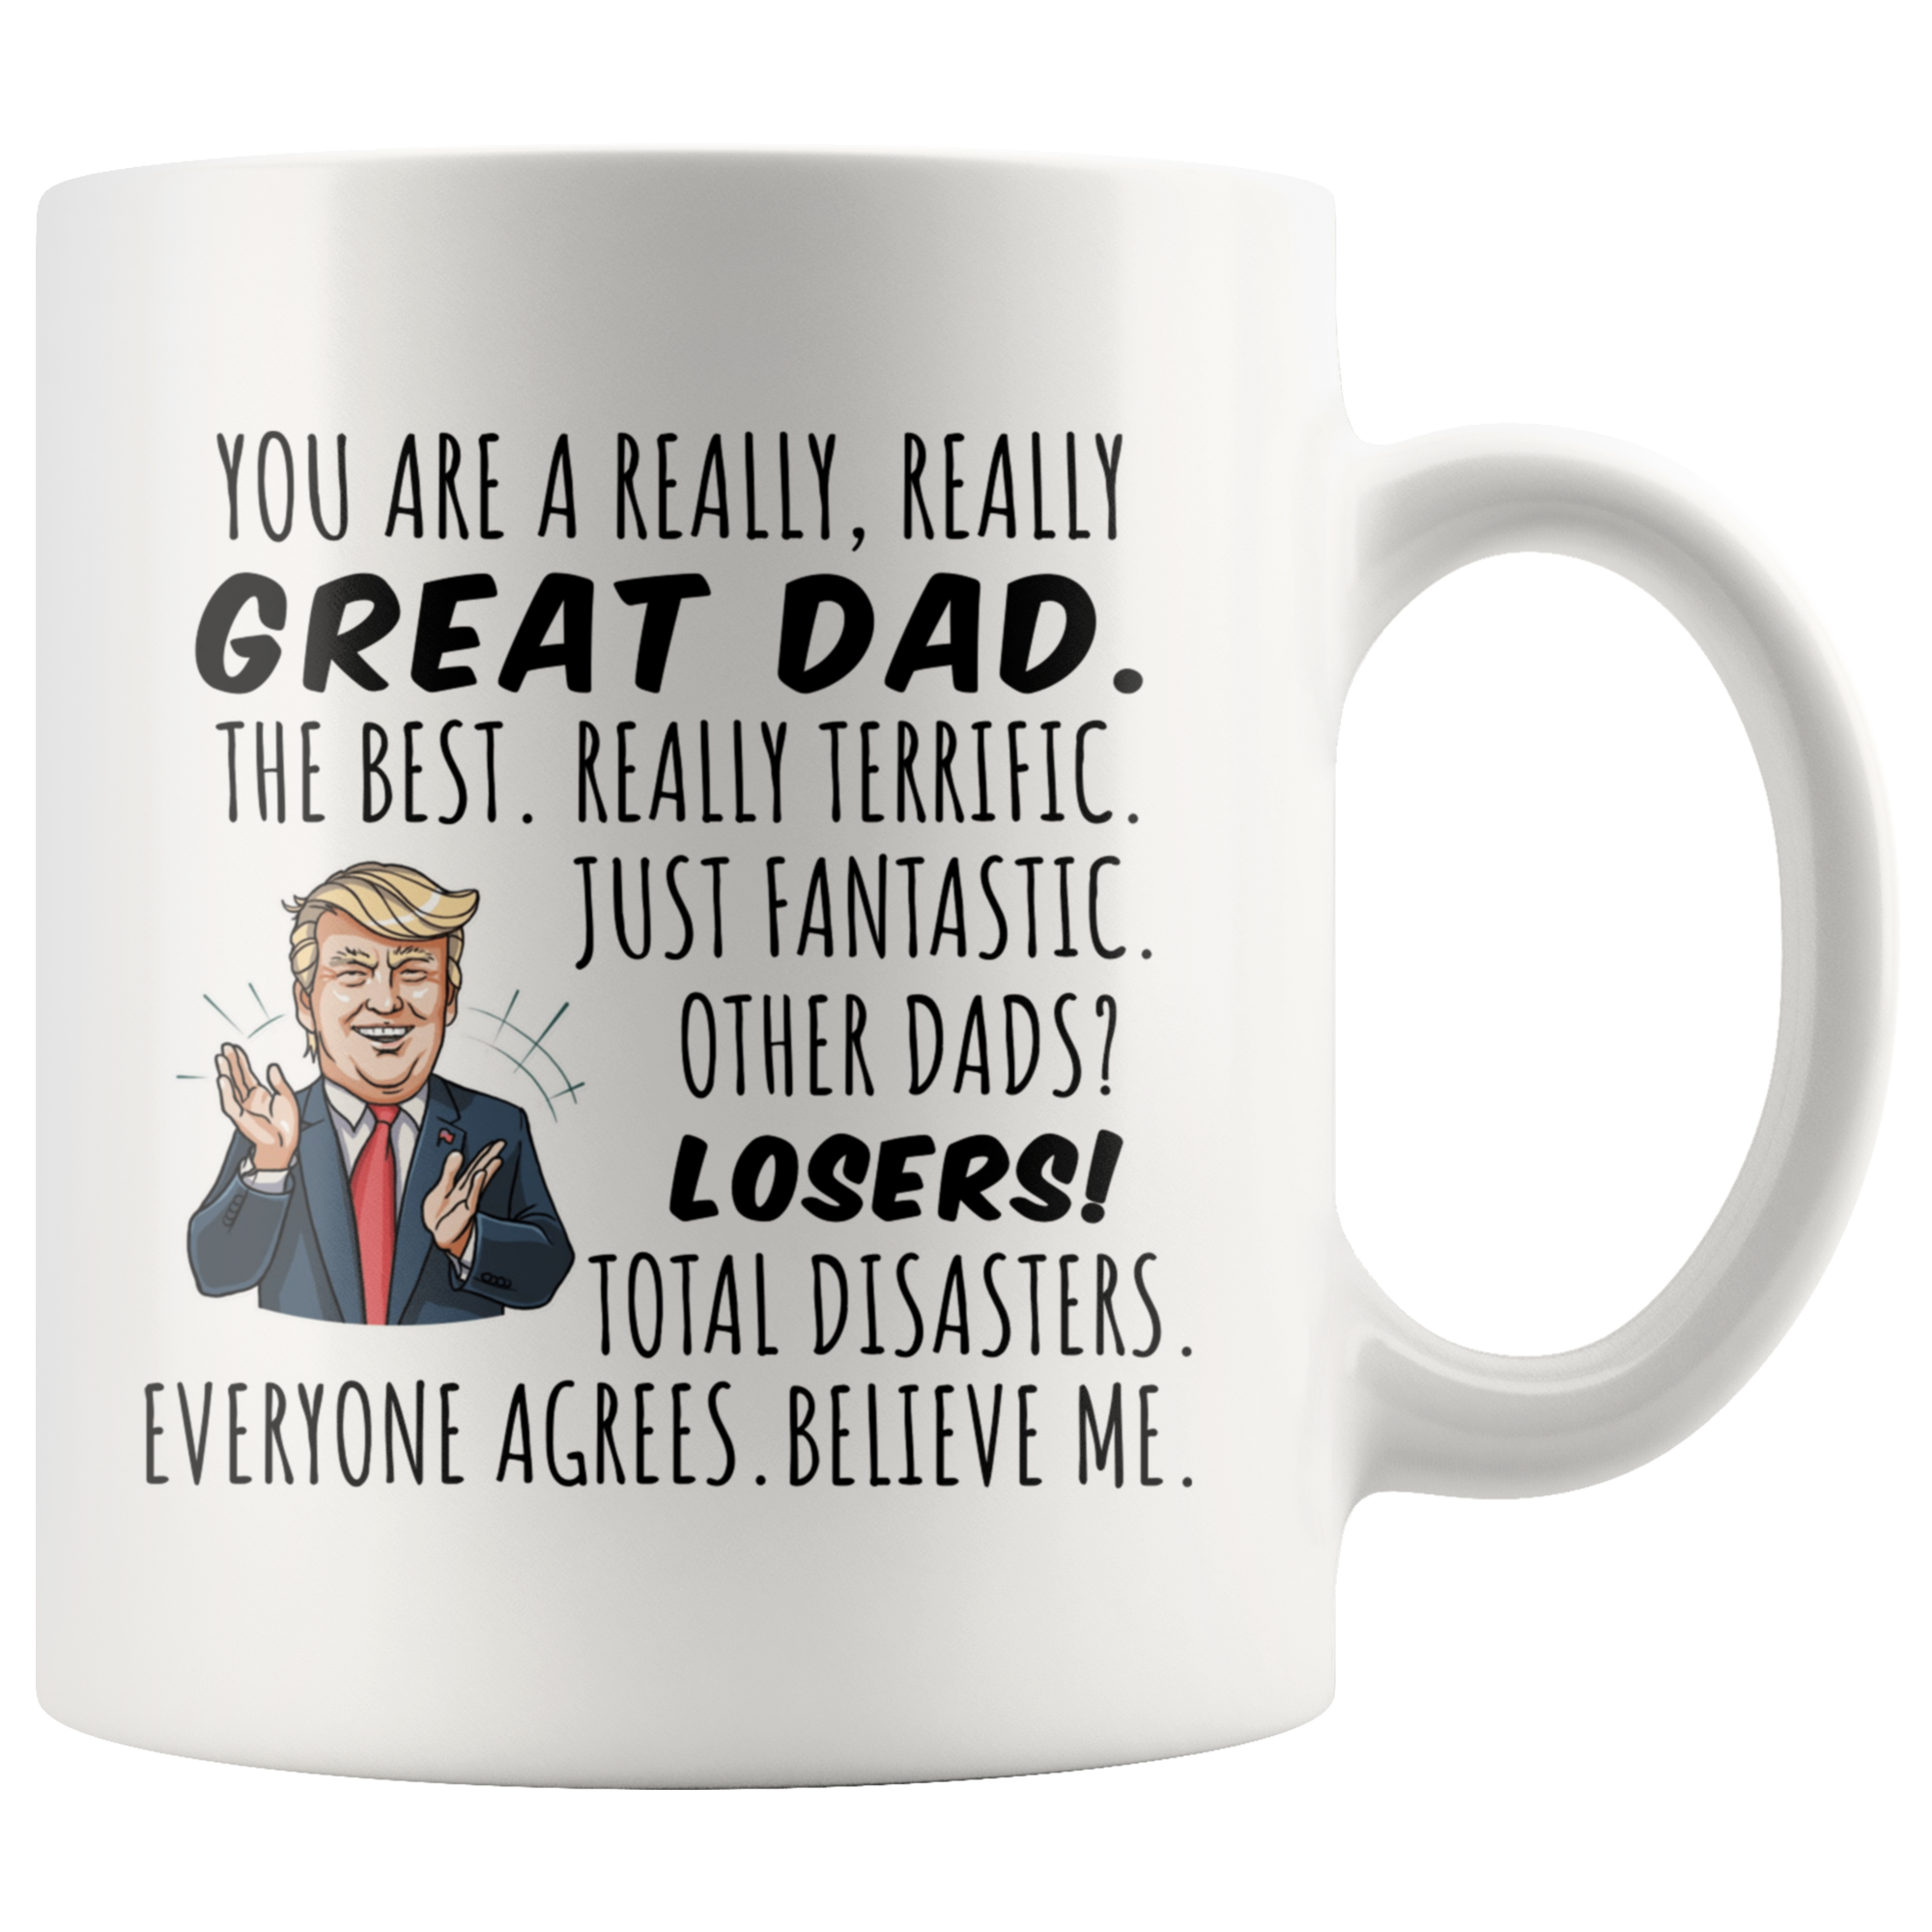 Great Dad Trump Mug